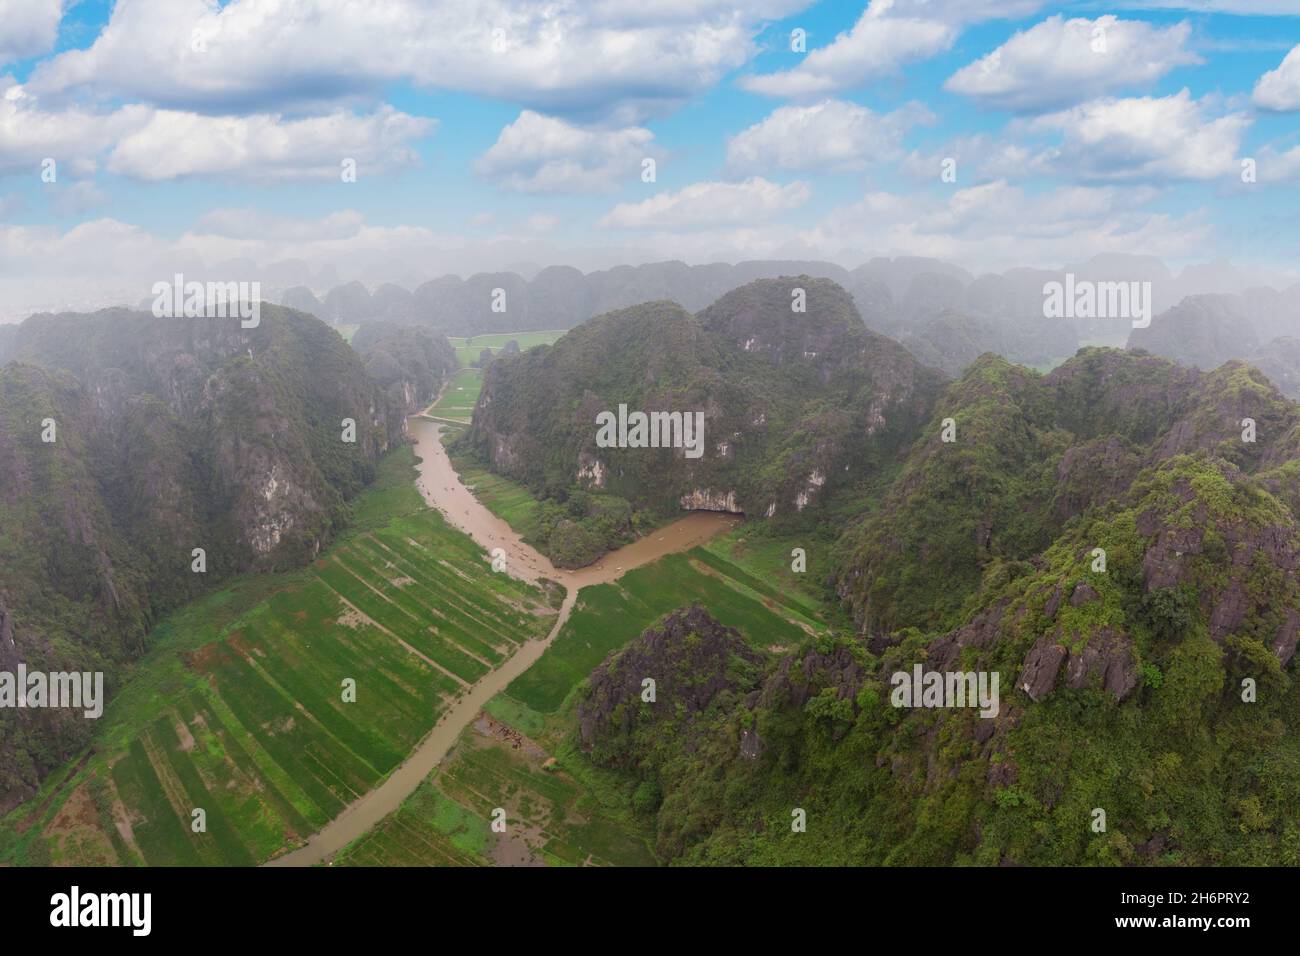 Aerial view of Trang An from viewpoint Hang Mua, scenic area near Ninh Binh, Vietnam Stock Photo